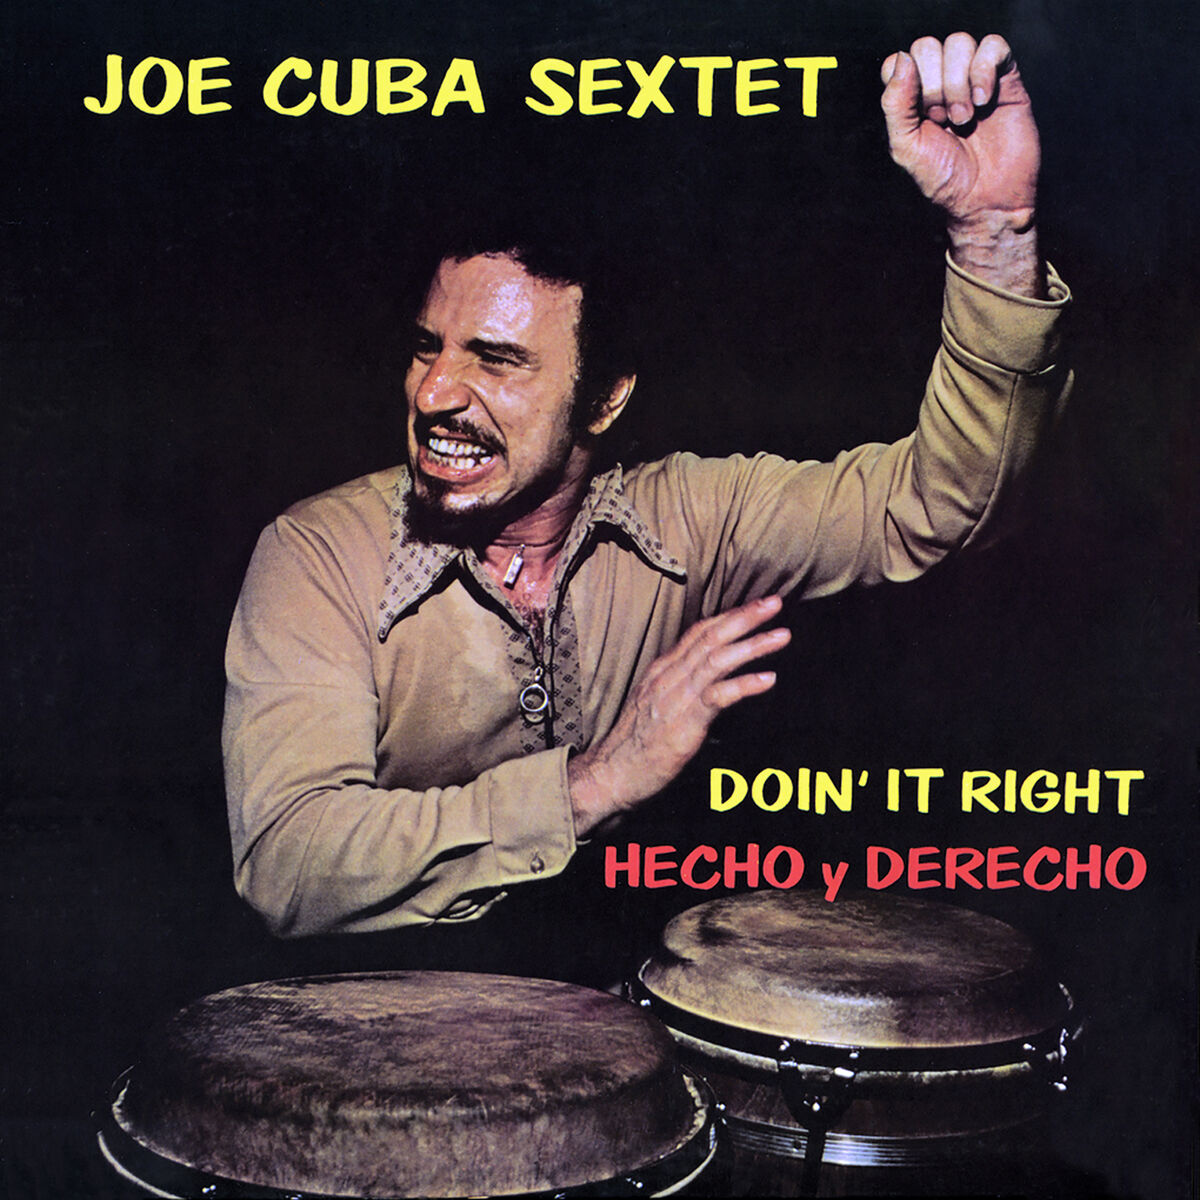 Joe Cuba Sextette: albums